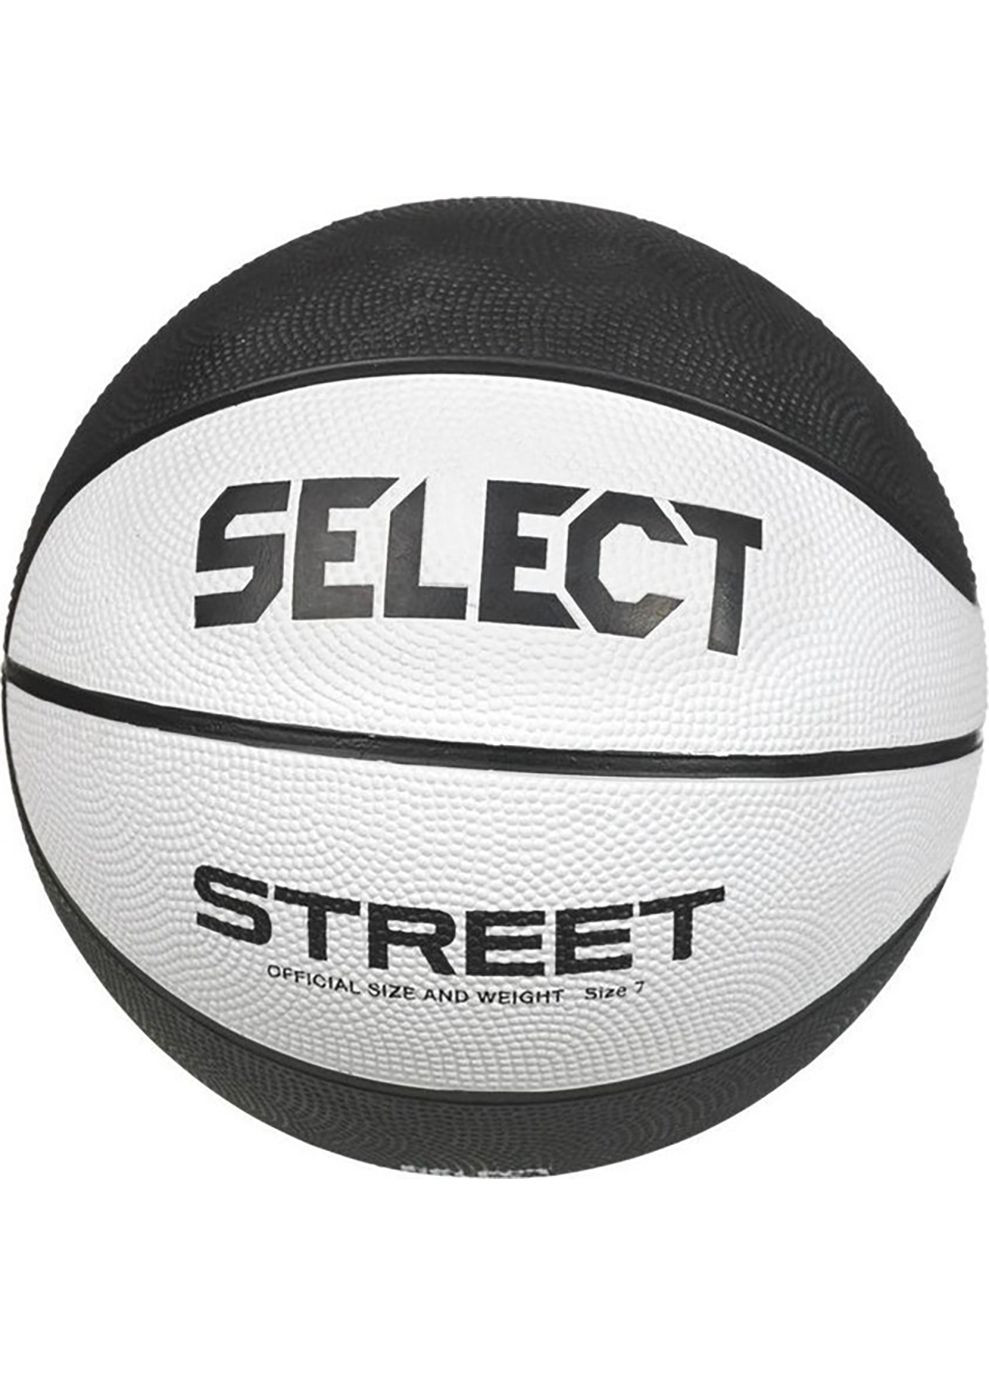 М'яч баскетбольний BASKETBALL STREET v23 біло-чорний Уні 5 Select (268832699)